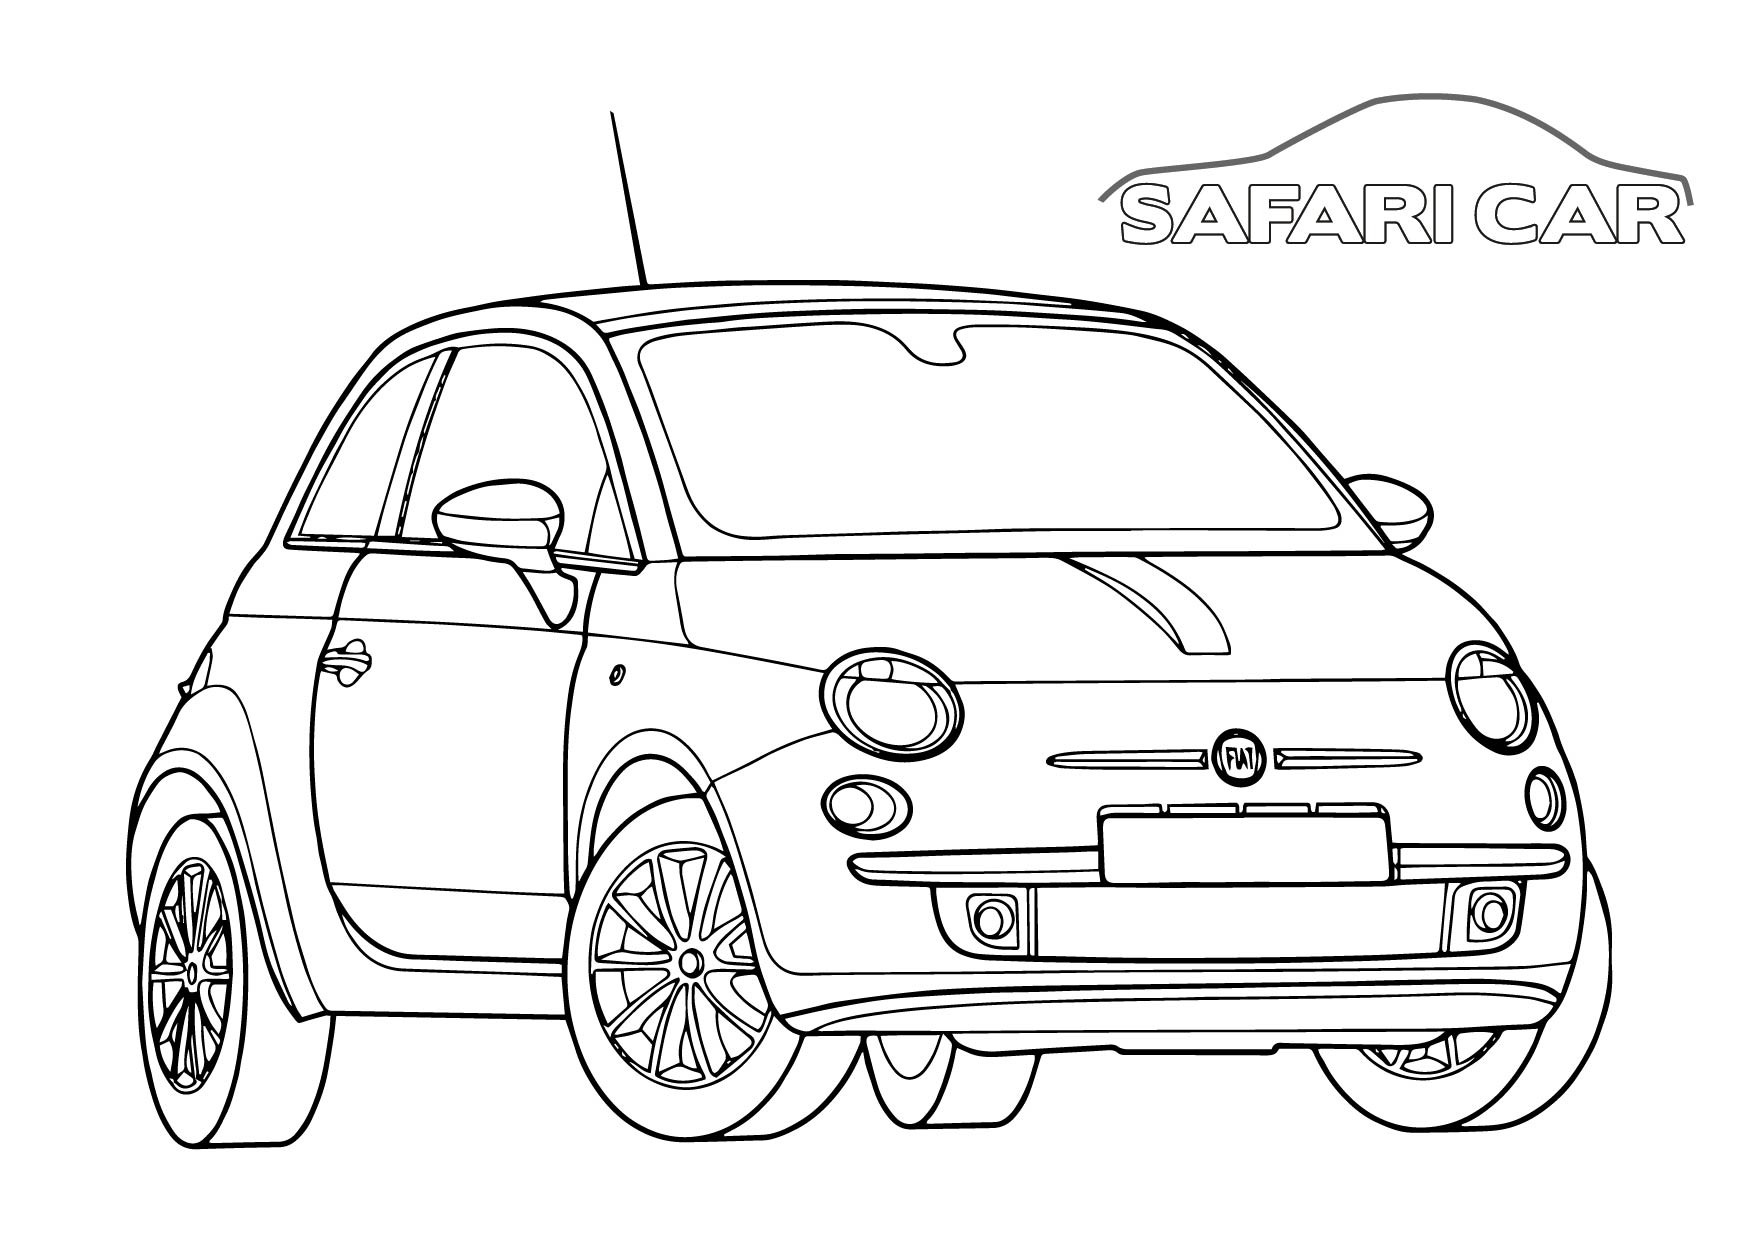 fiat500safaricar 01